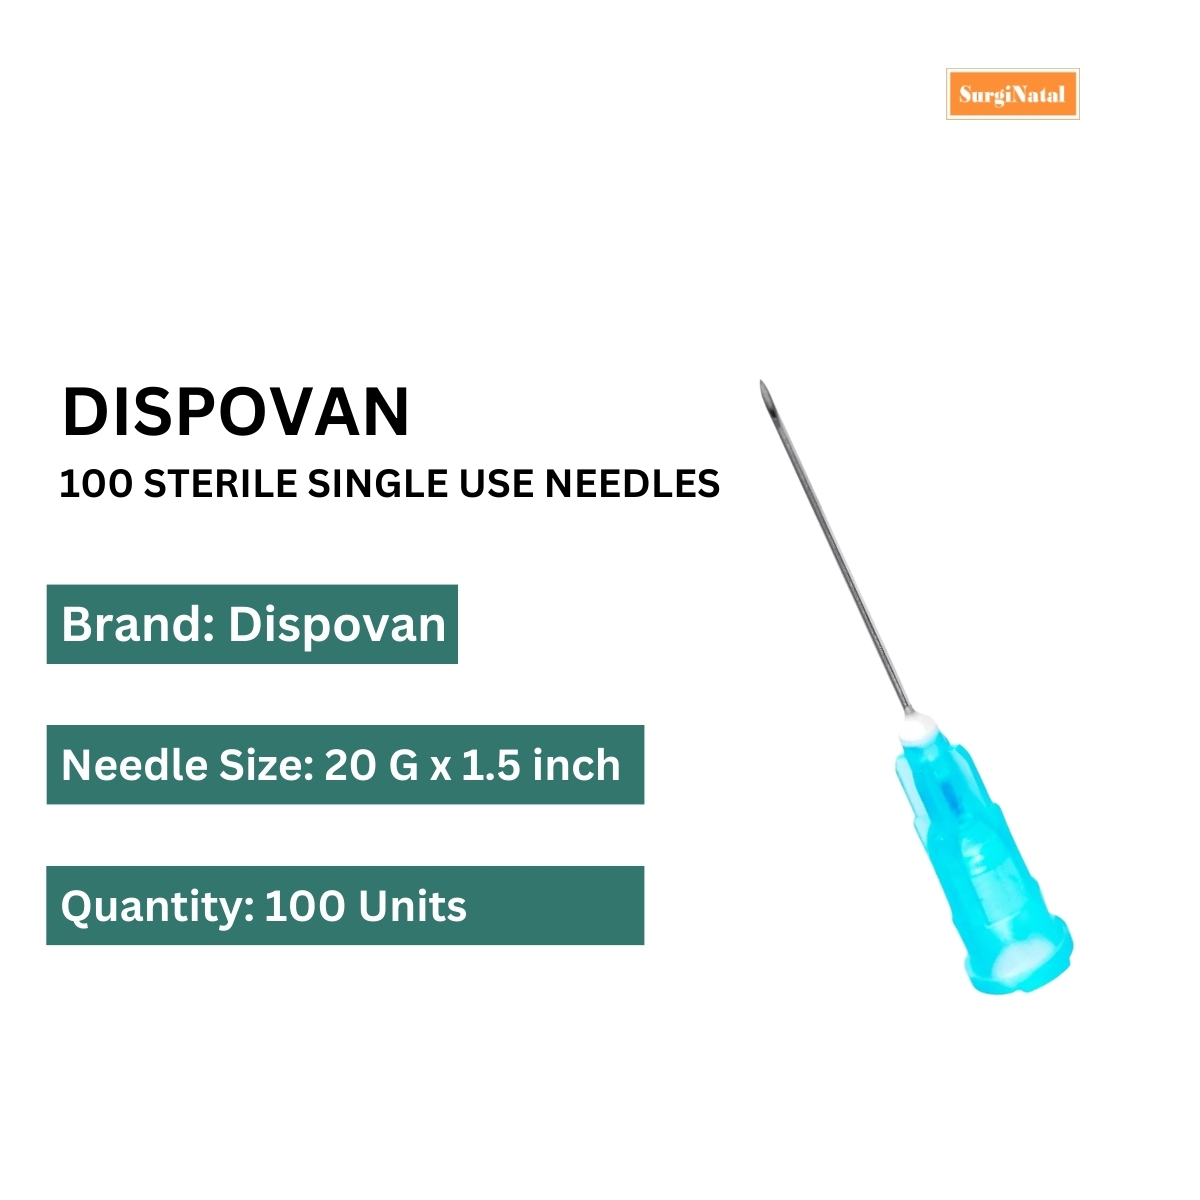 dispo van hypodermic needle - 20g*1.5 inch - 100 units pack